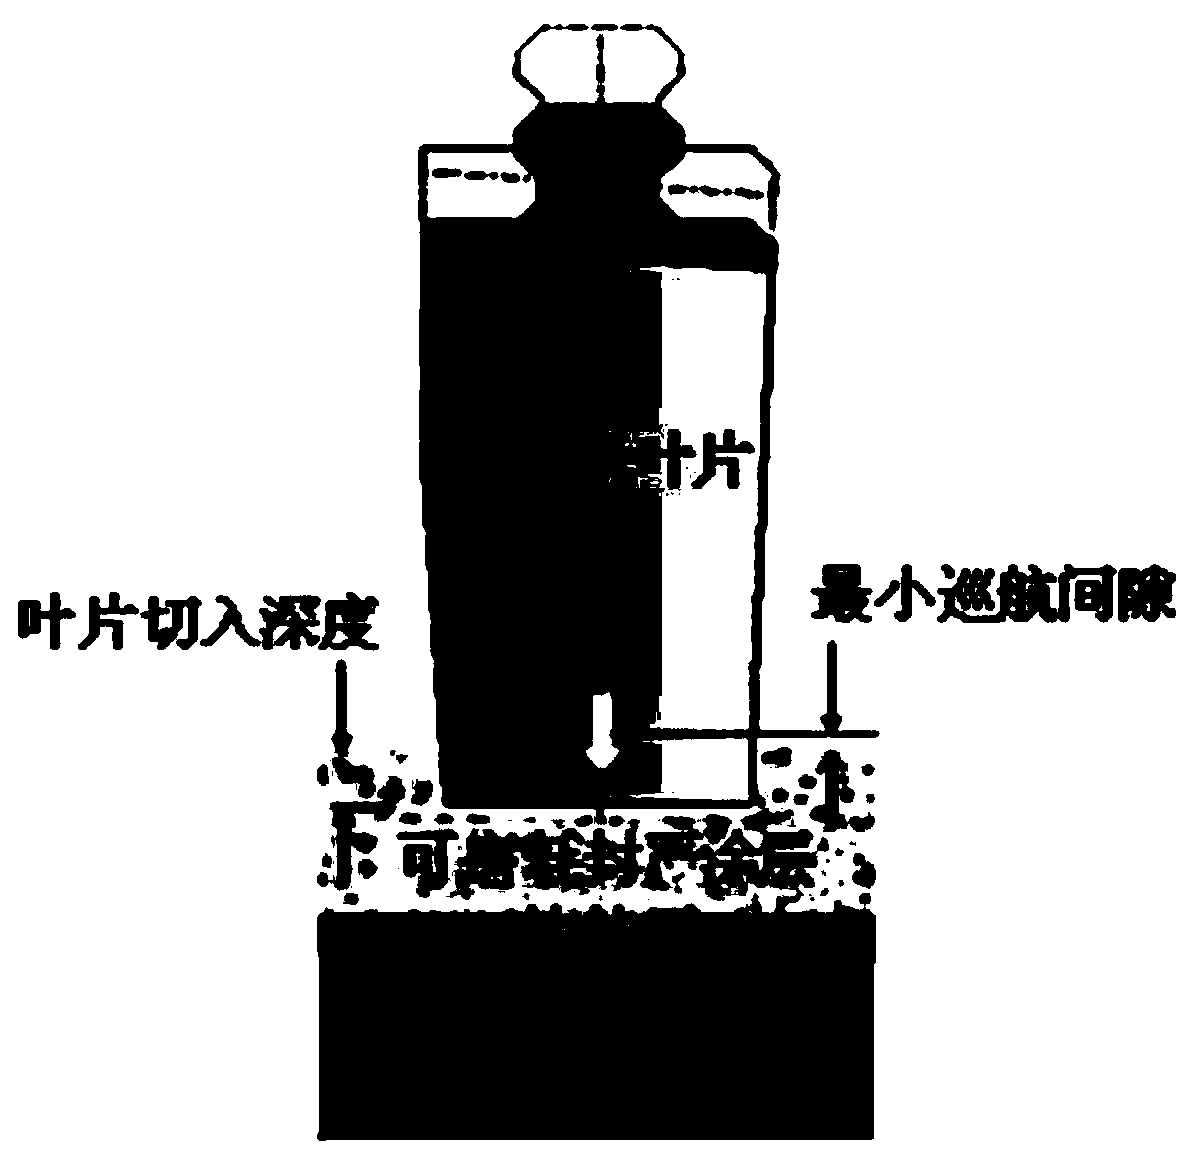 Control method of titanium alloy compressor tip clearance